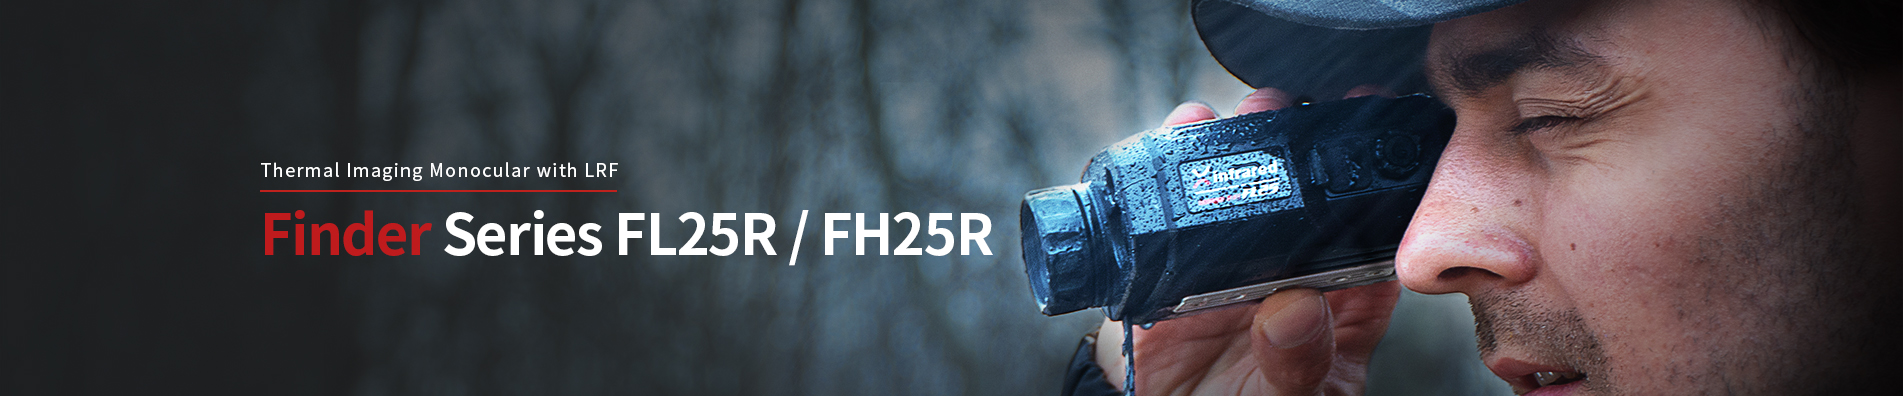 Wärmebild-Oszilloskop-Finder-Serie (FH25R&FL25R)